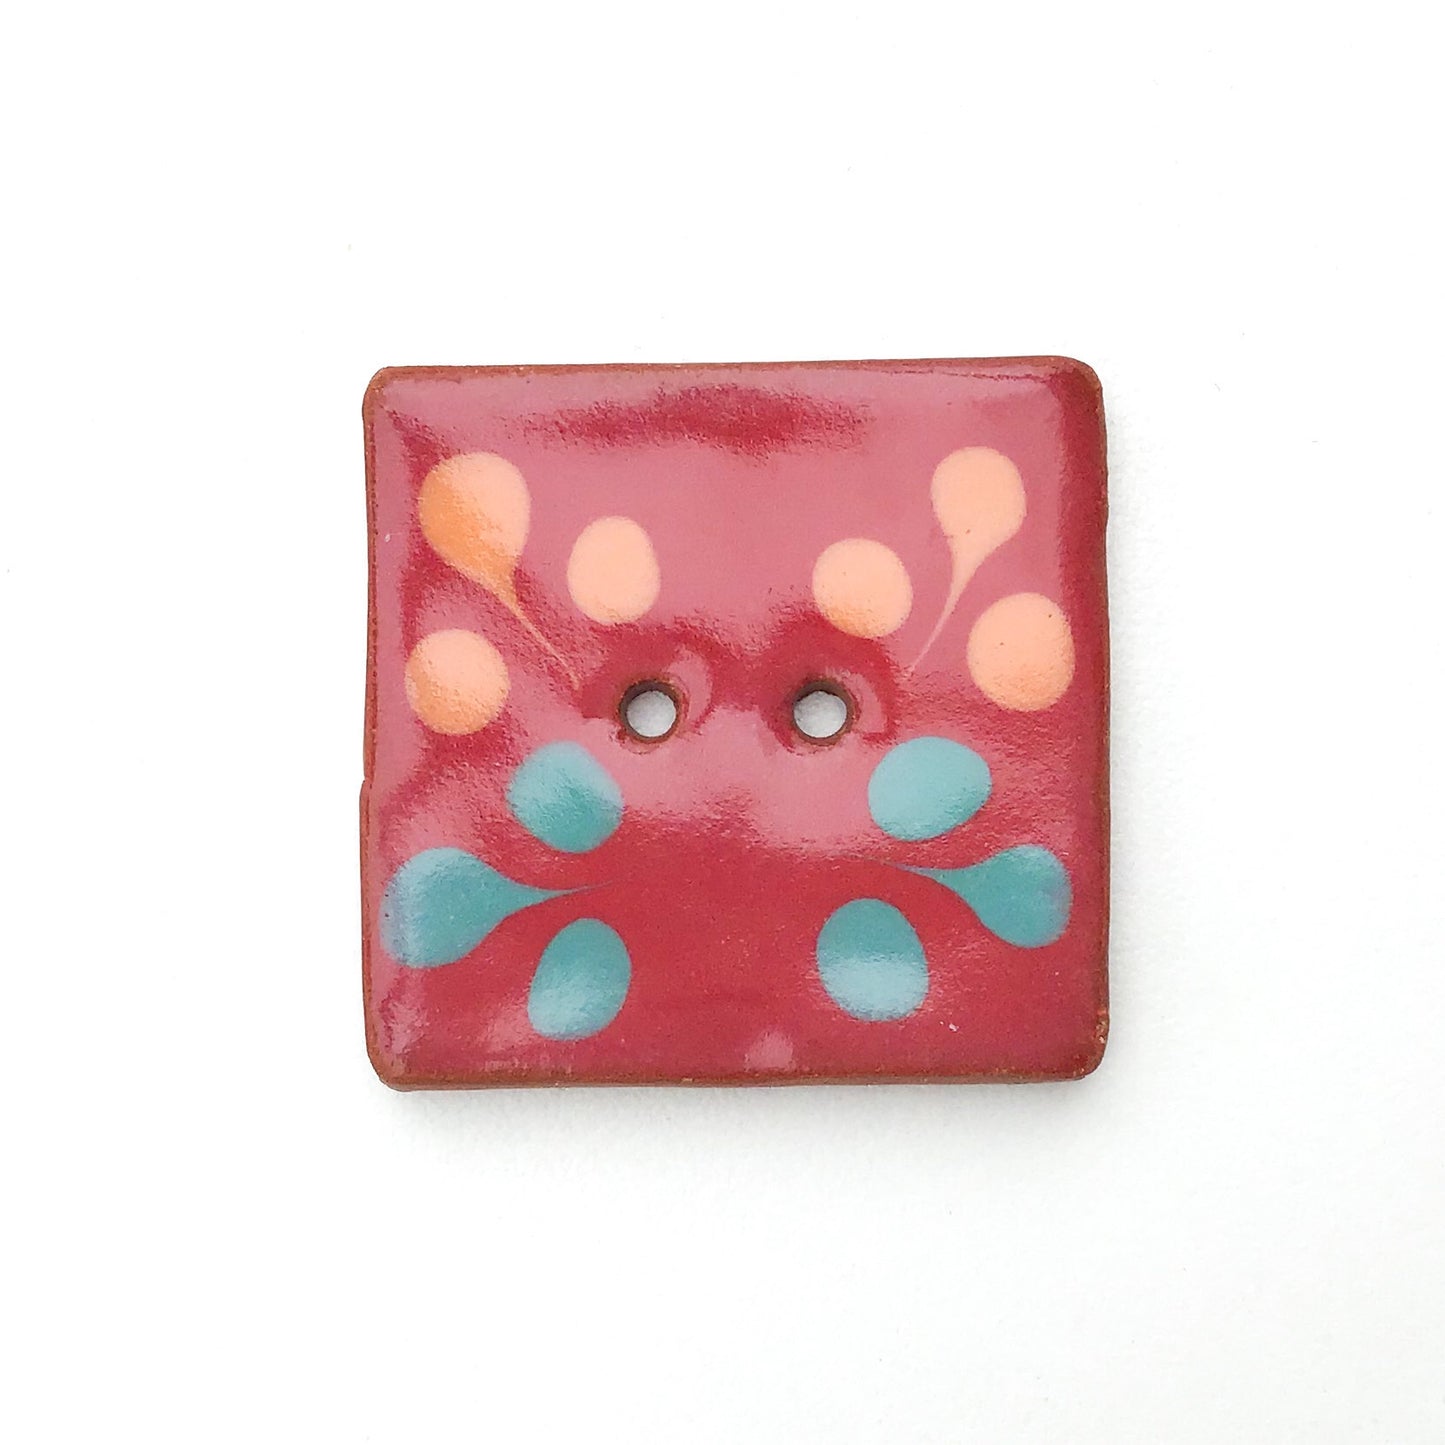 Large Square Decorative Button - Raspberry - Turquoise - Orange - Art Button - 1 3/8"